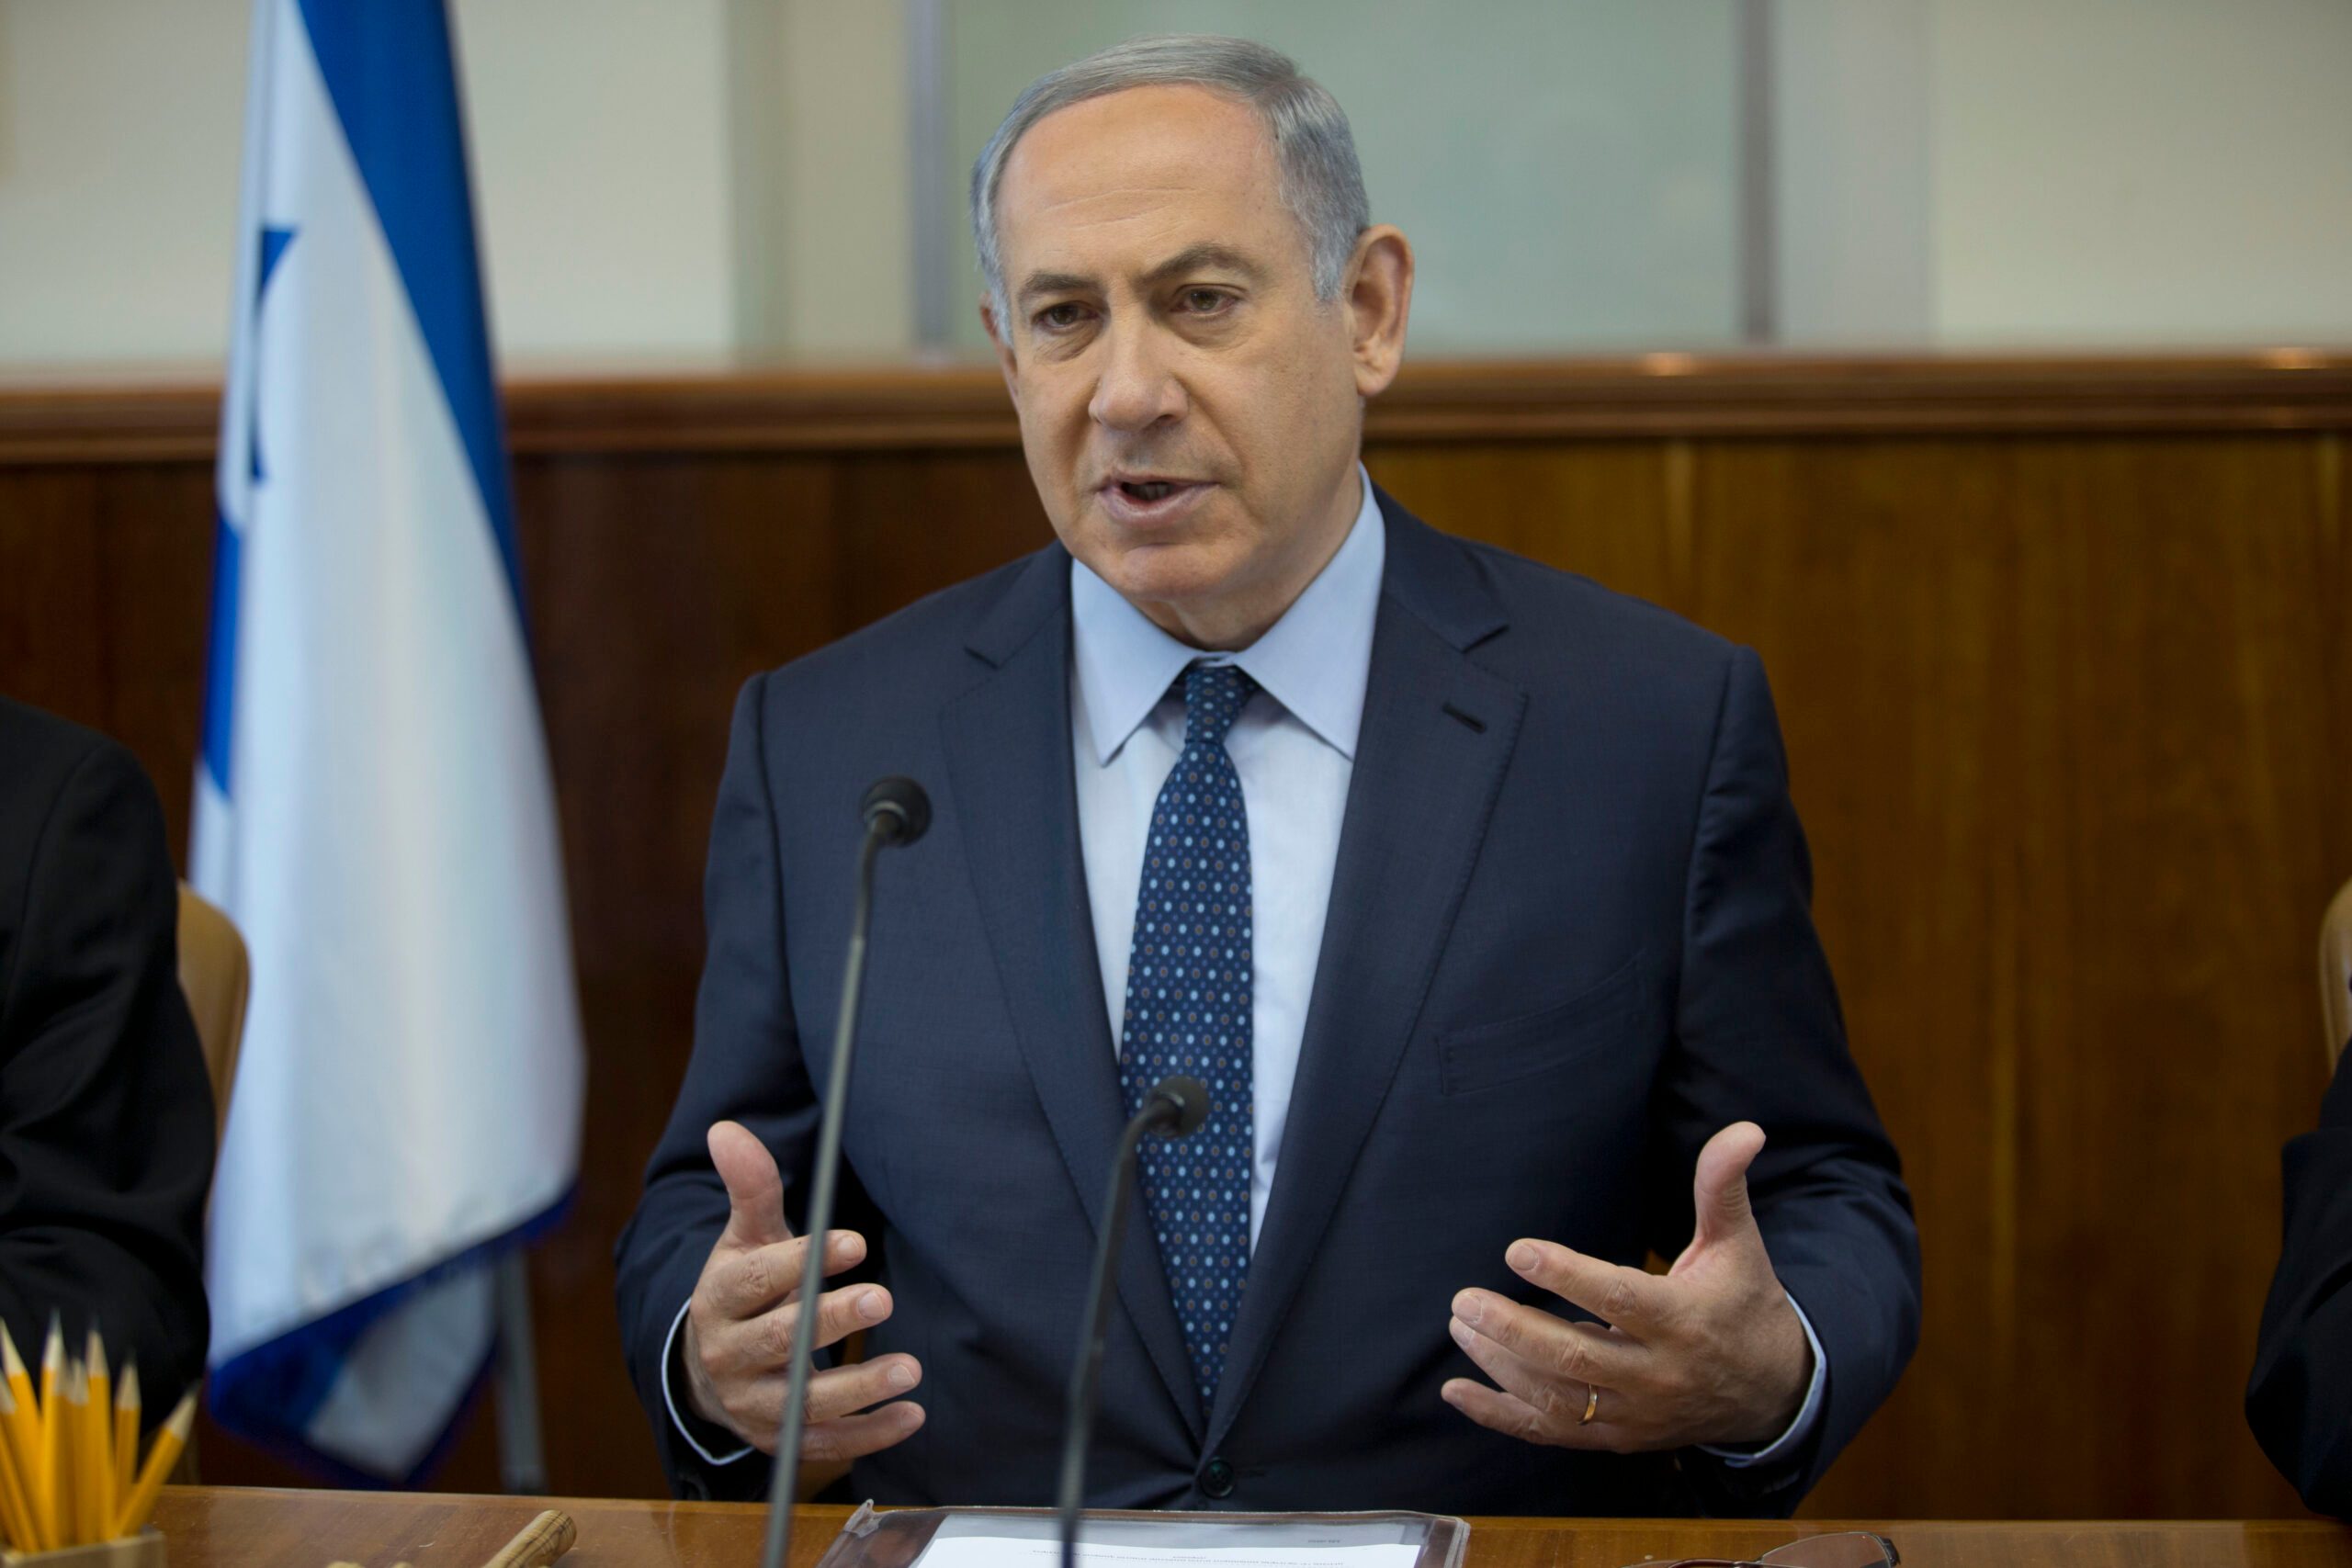 Netanyahu plays down rift with US ahead of Biden visit